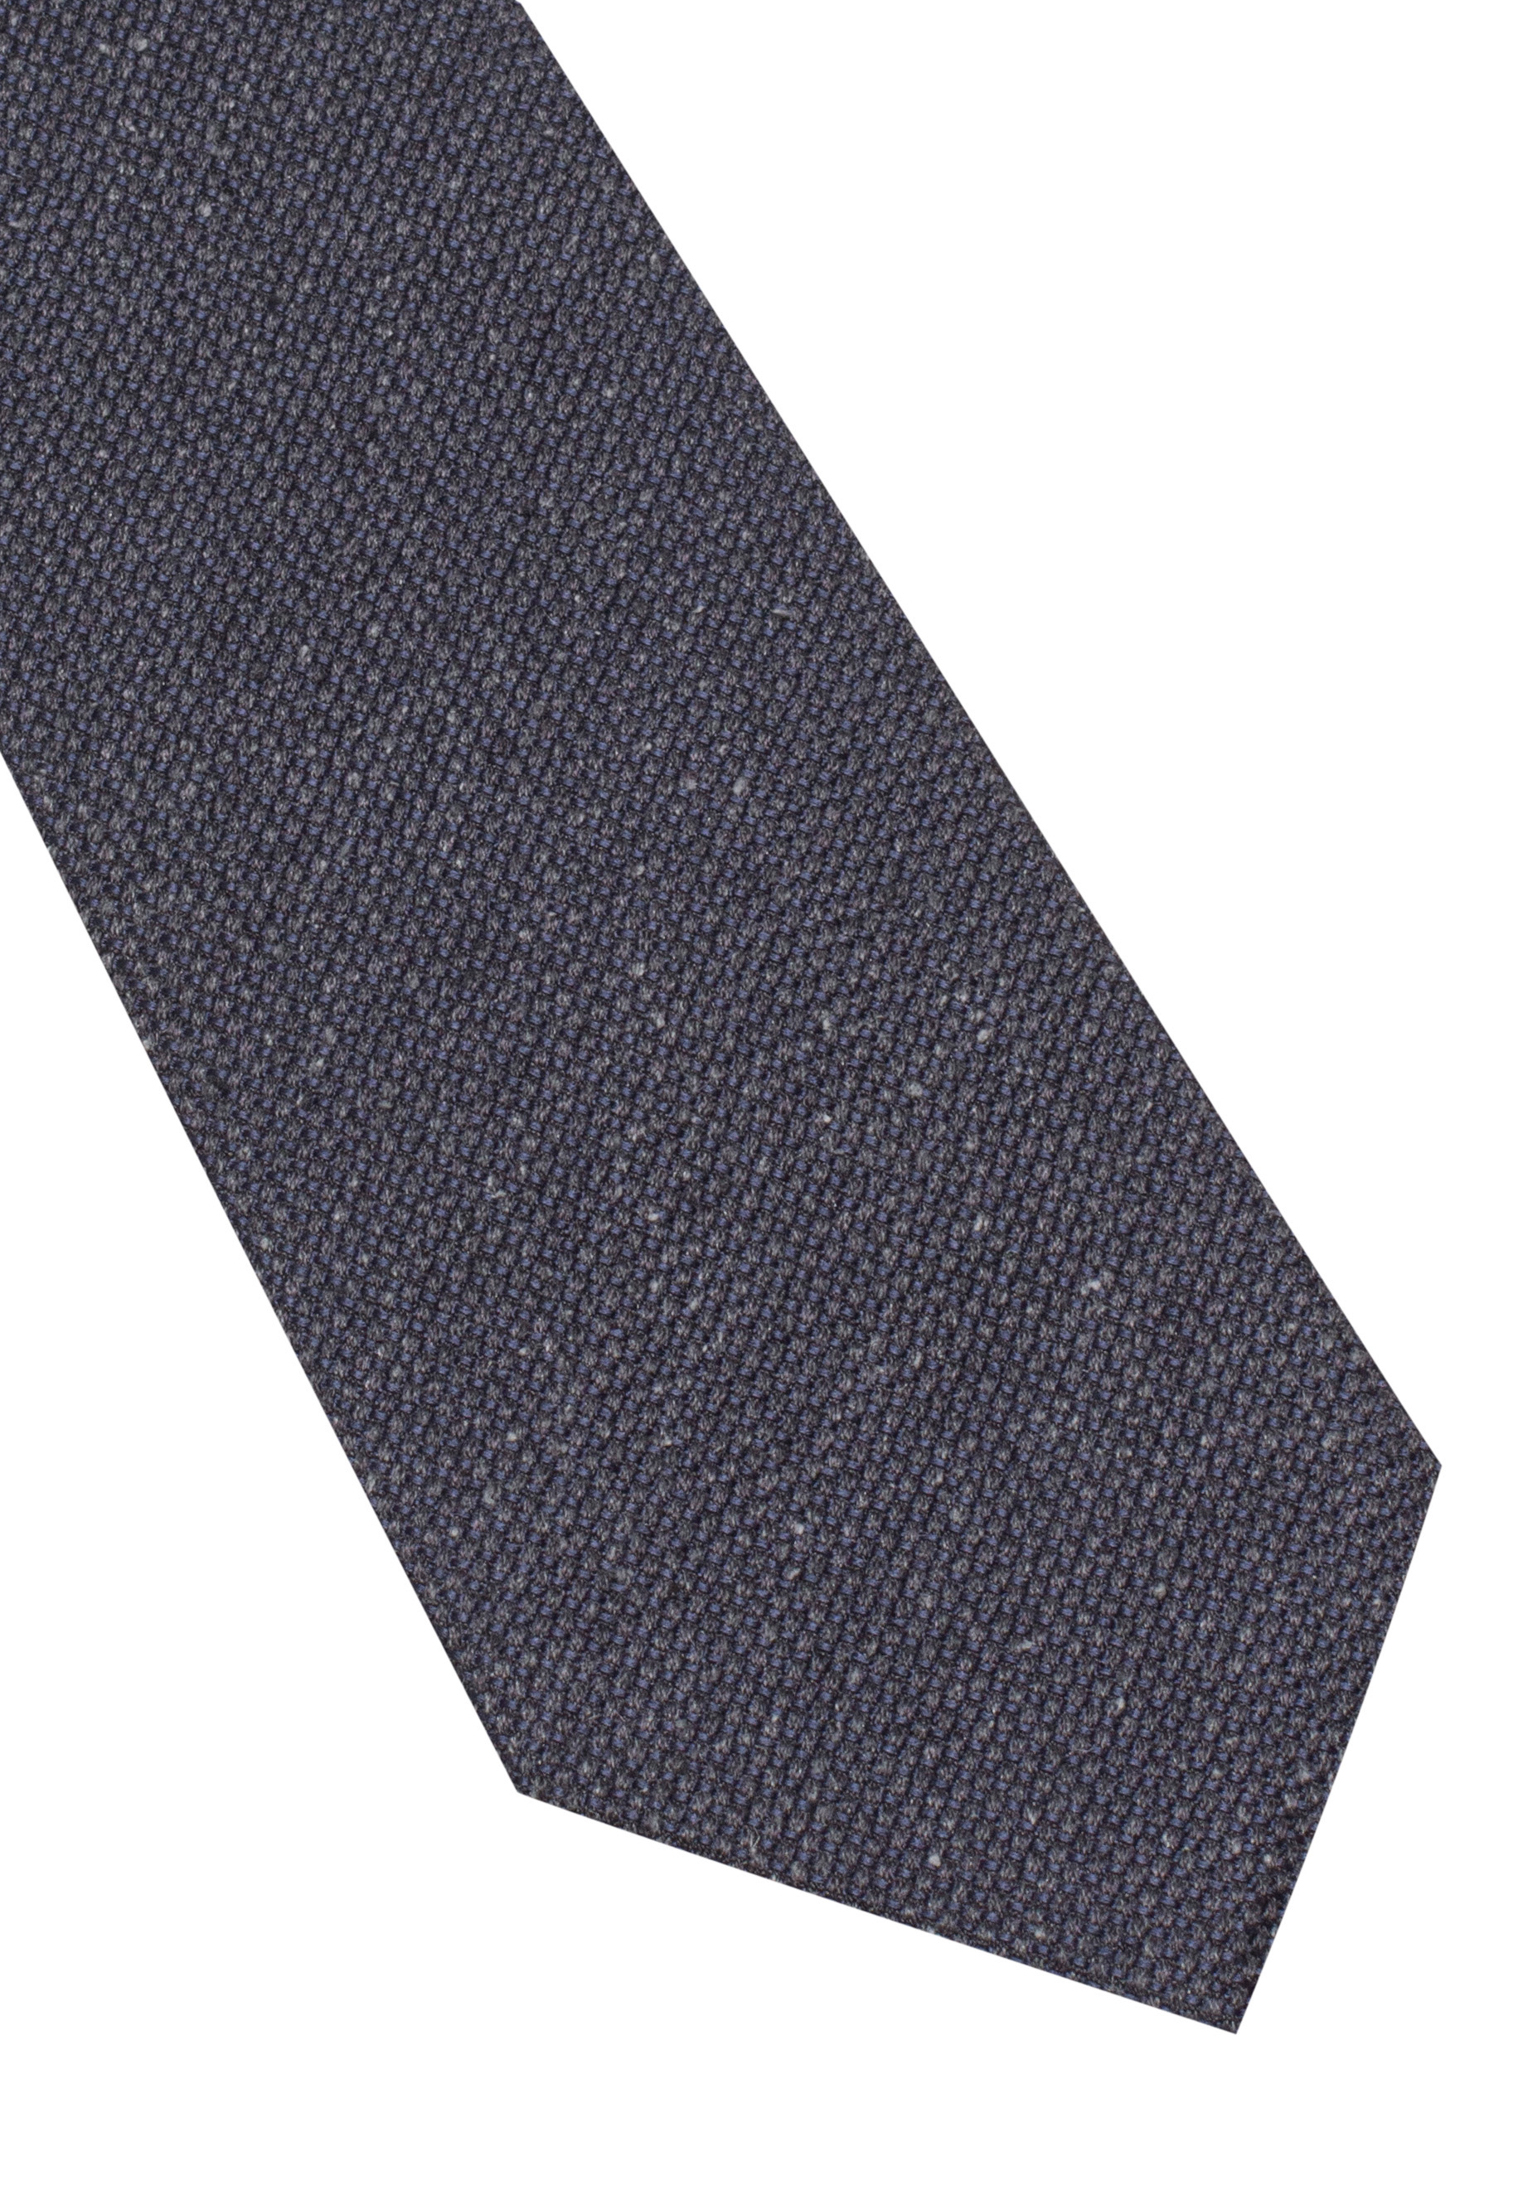 Krawatte in grau unifarben